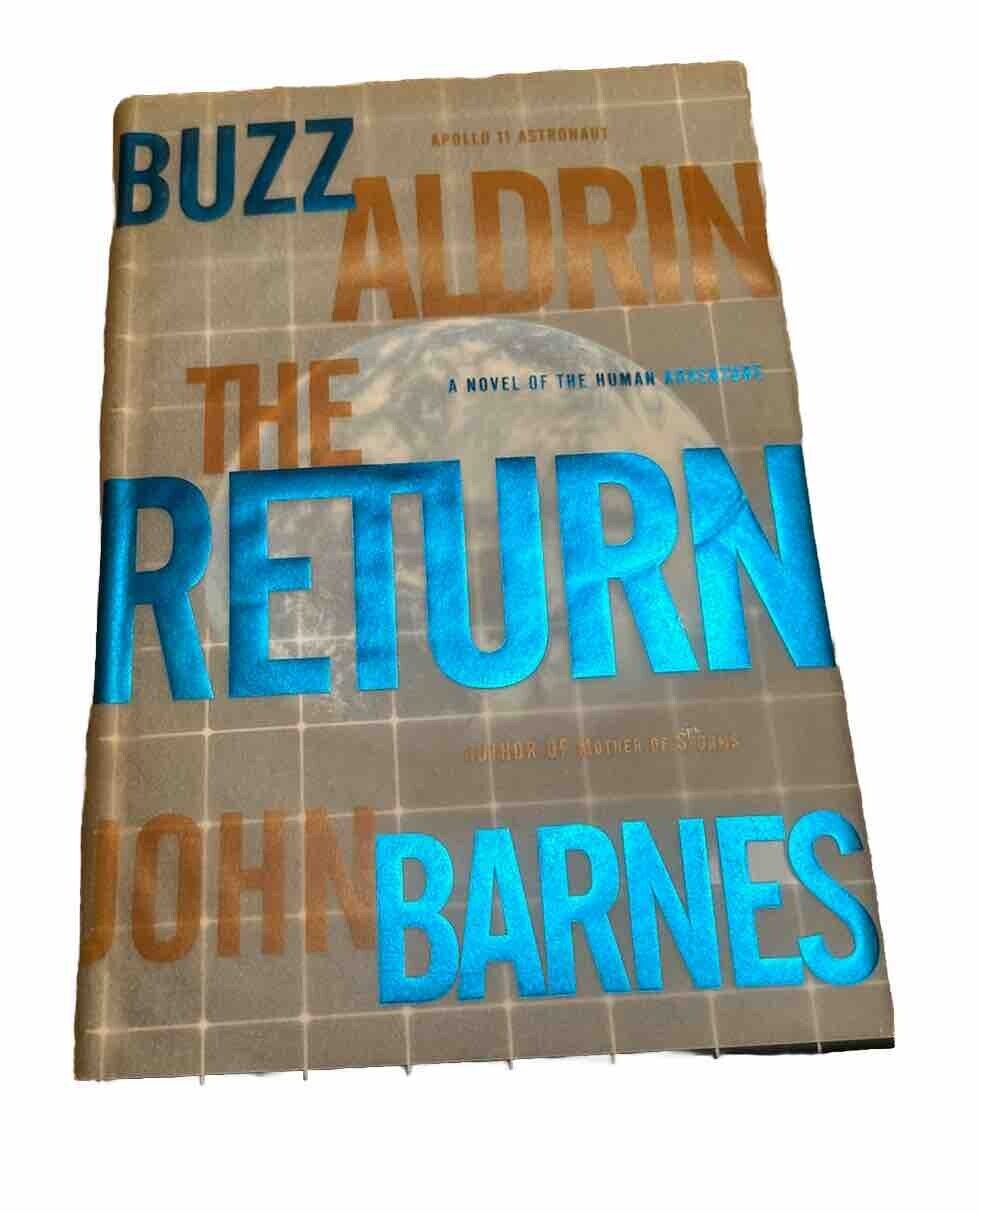 Buzz Aldrin Signed Book THE RETURN John Barnes HCDJ 2000 First Edition